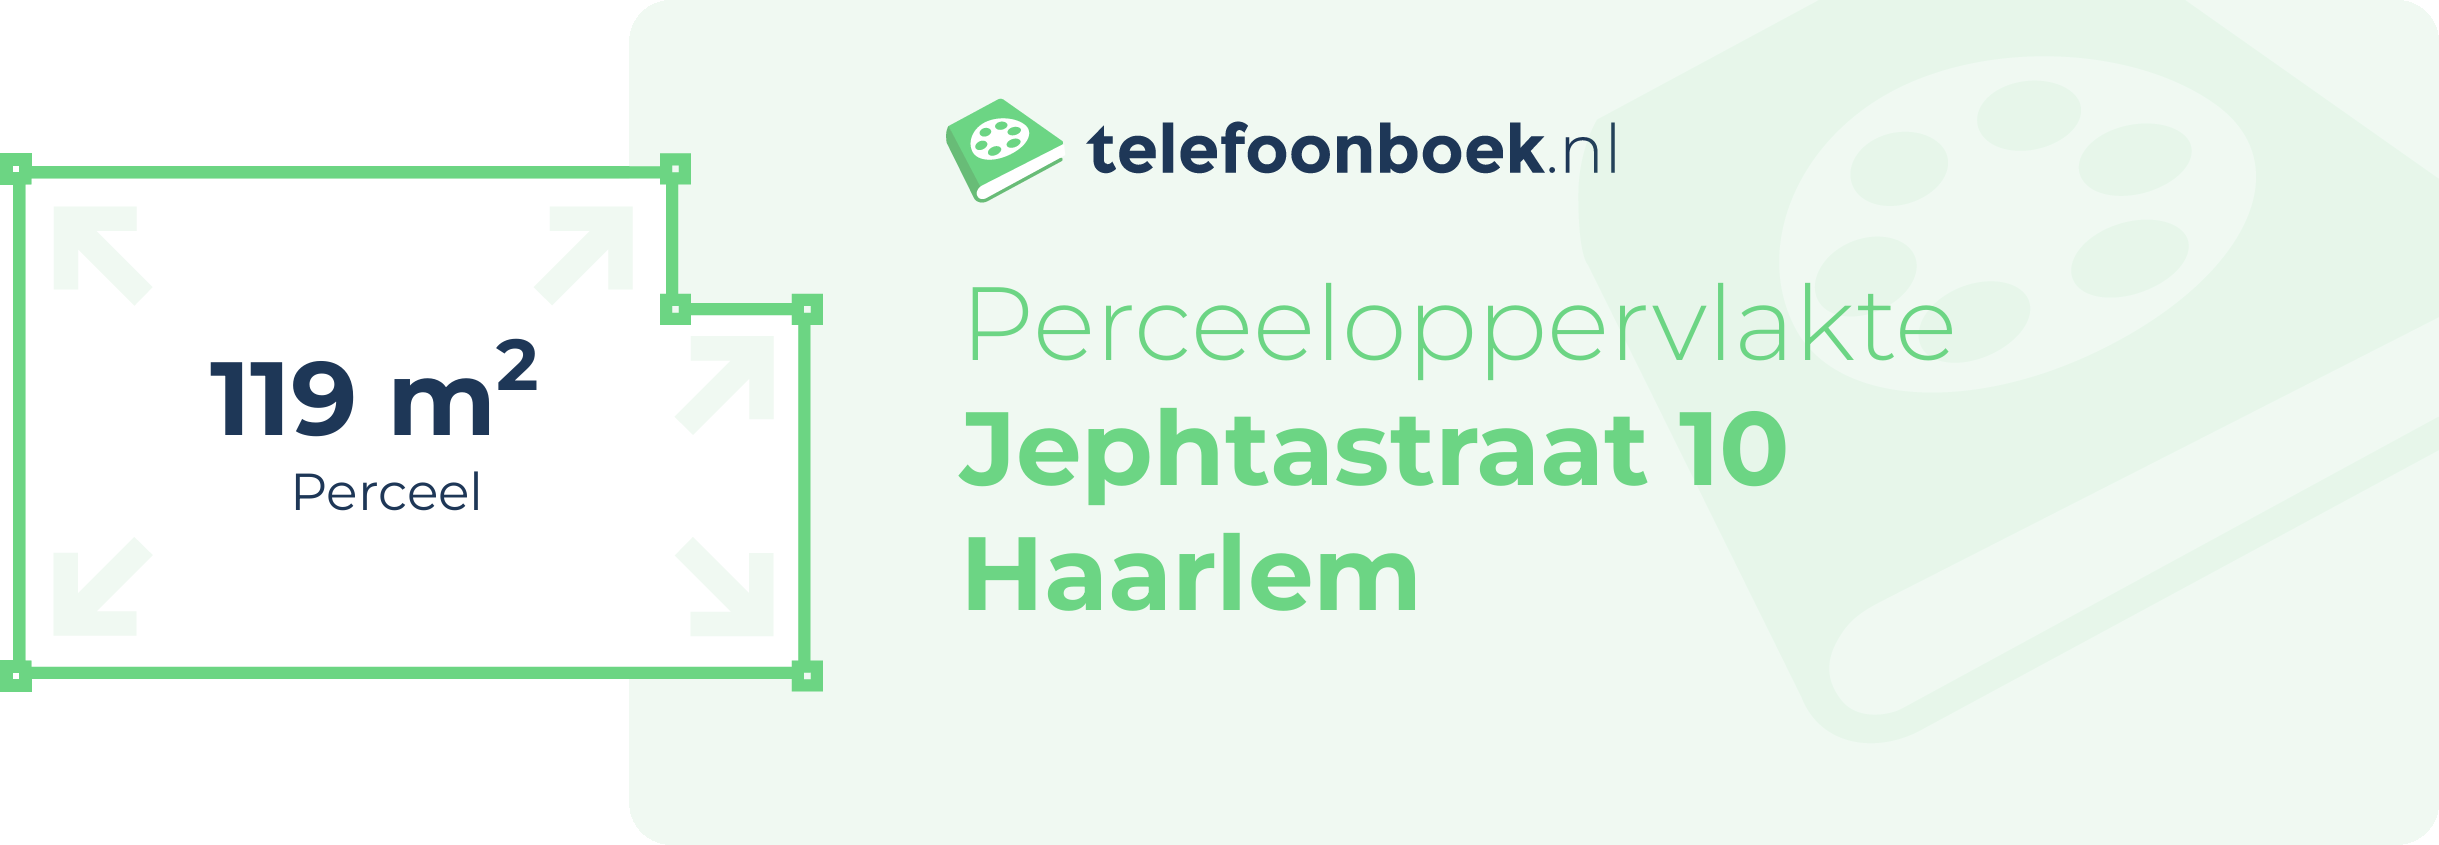 Perceeloppervlakte Jephtastraat 10 Haarlem